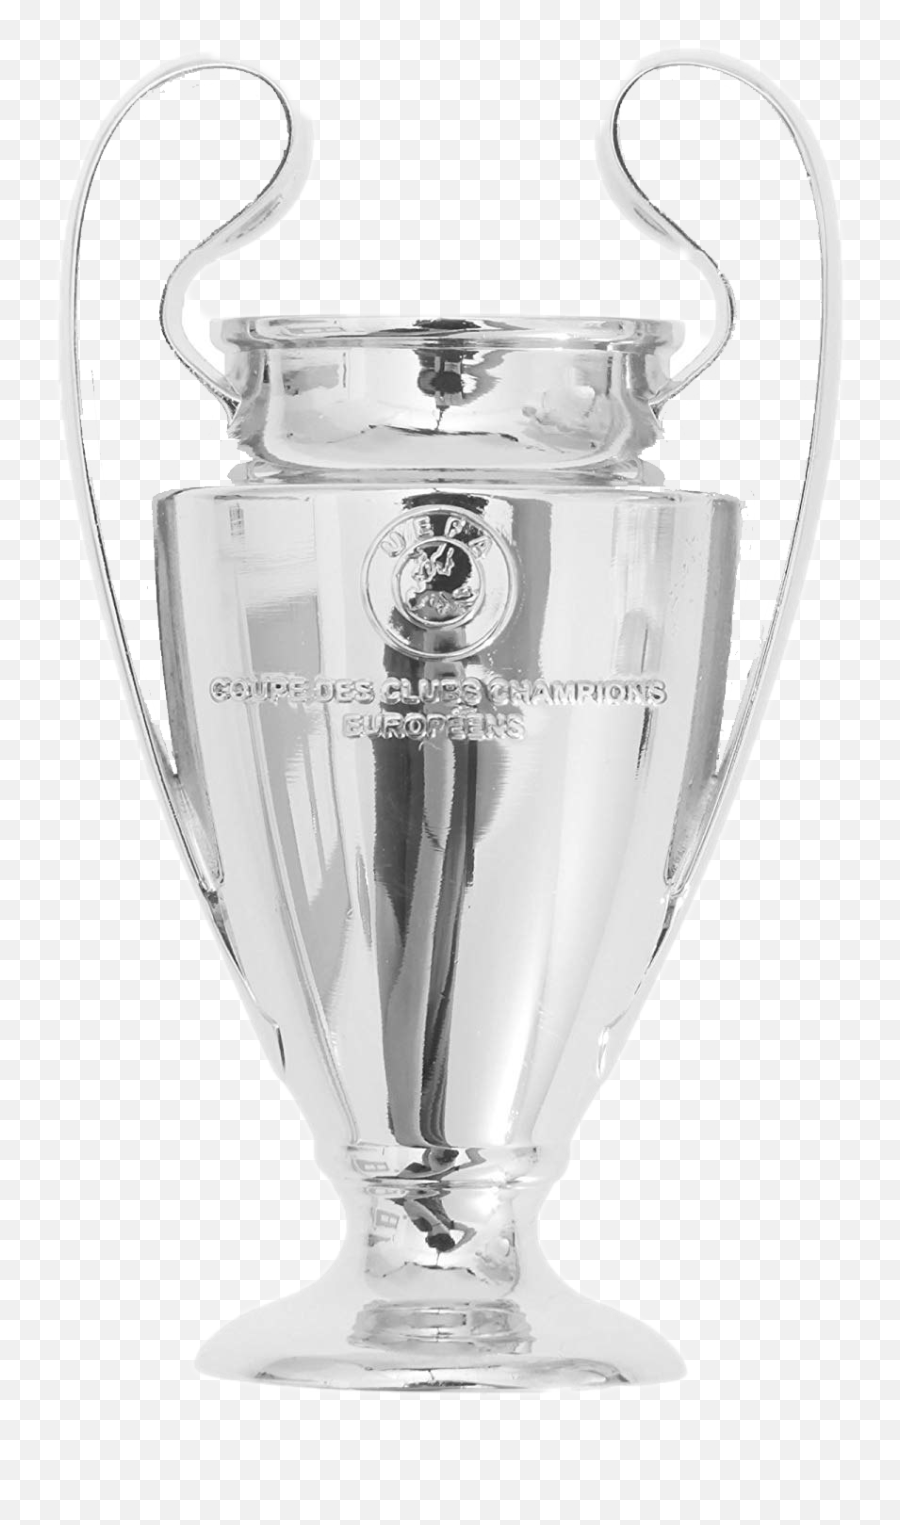 Uefa Champions League Trophy Png Image Uefa Champions League Trophy Trophy Png Free Transparent Png Images Pngaaa Com